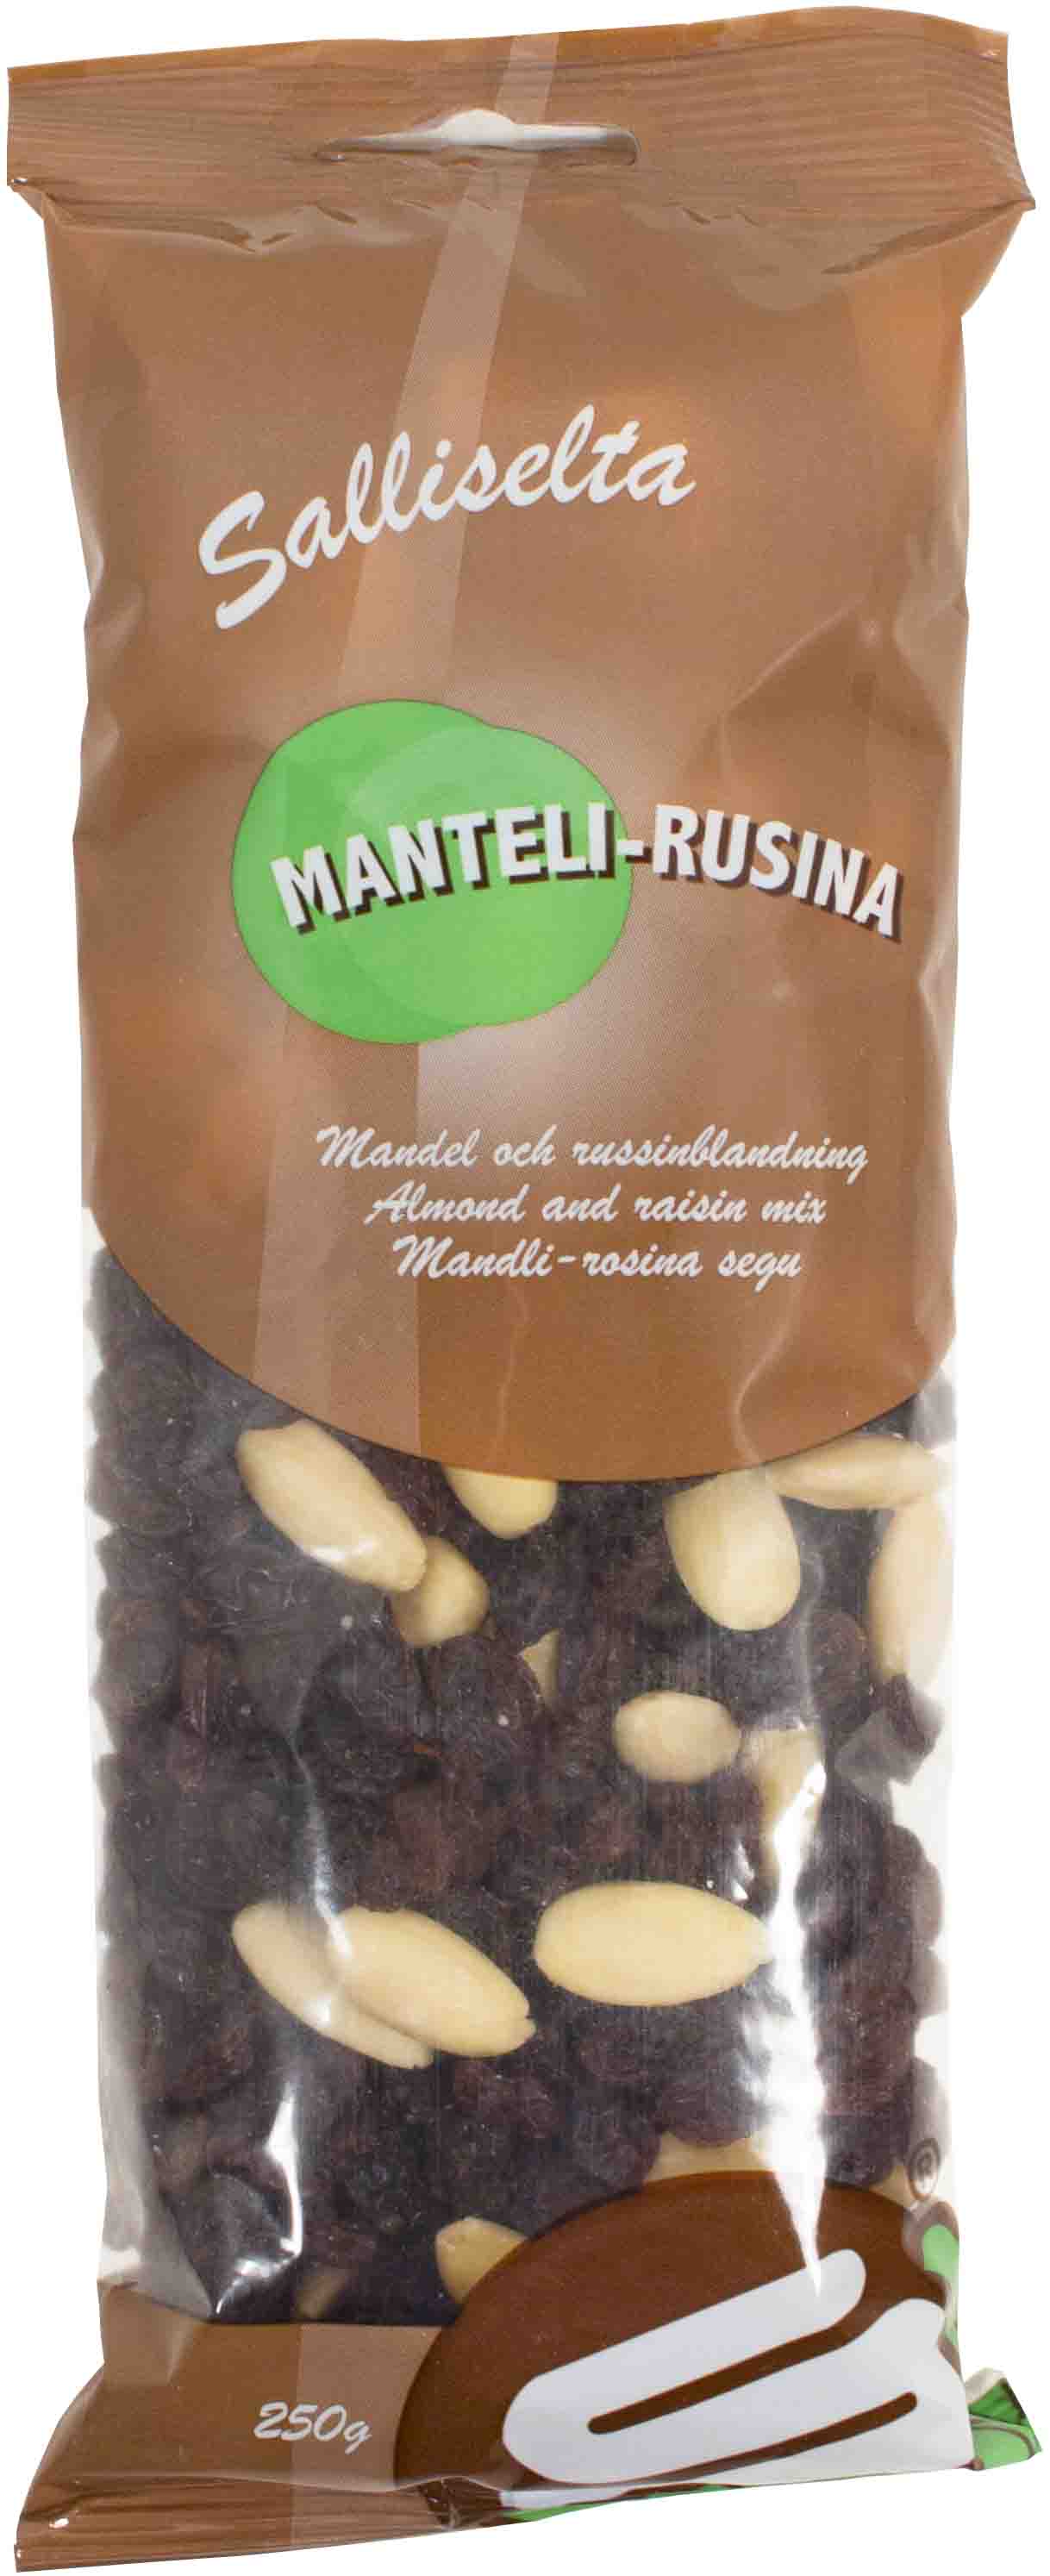 Almond and raisin mix 250g